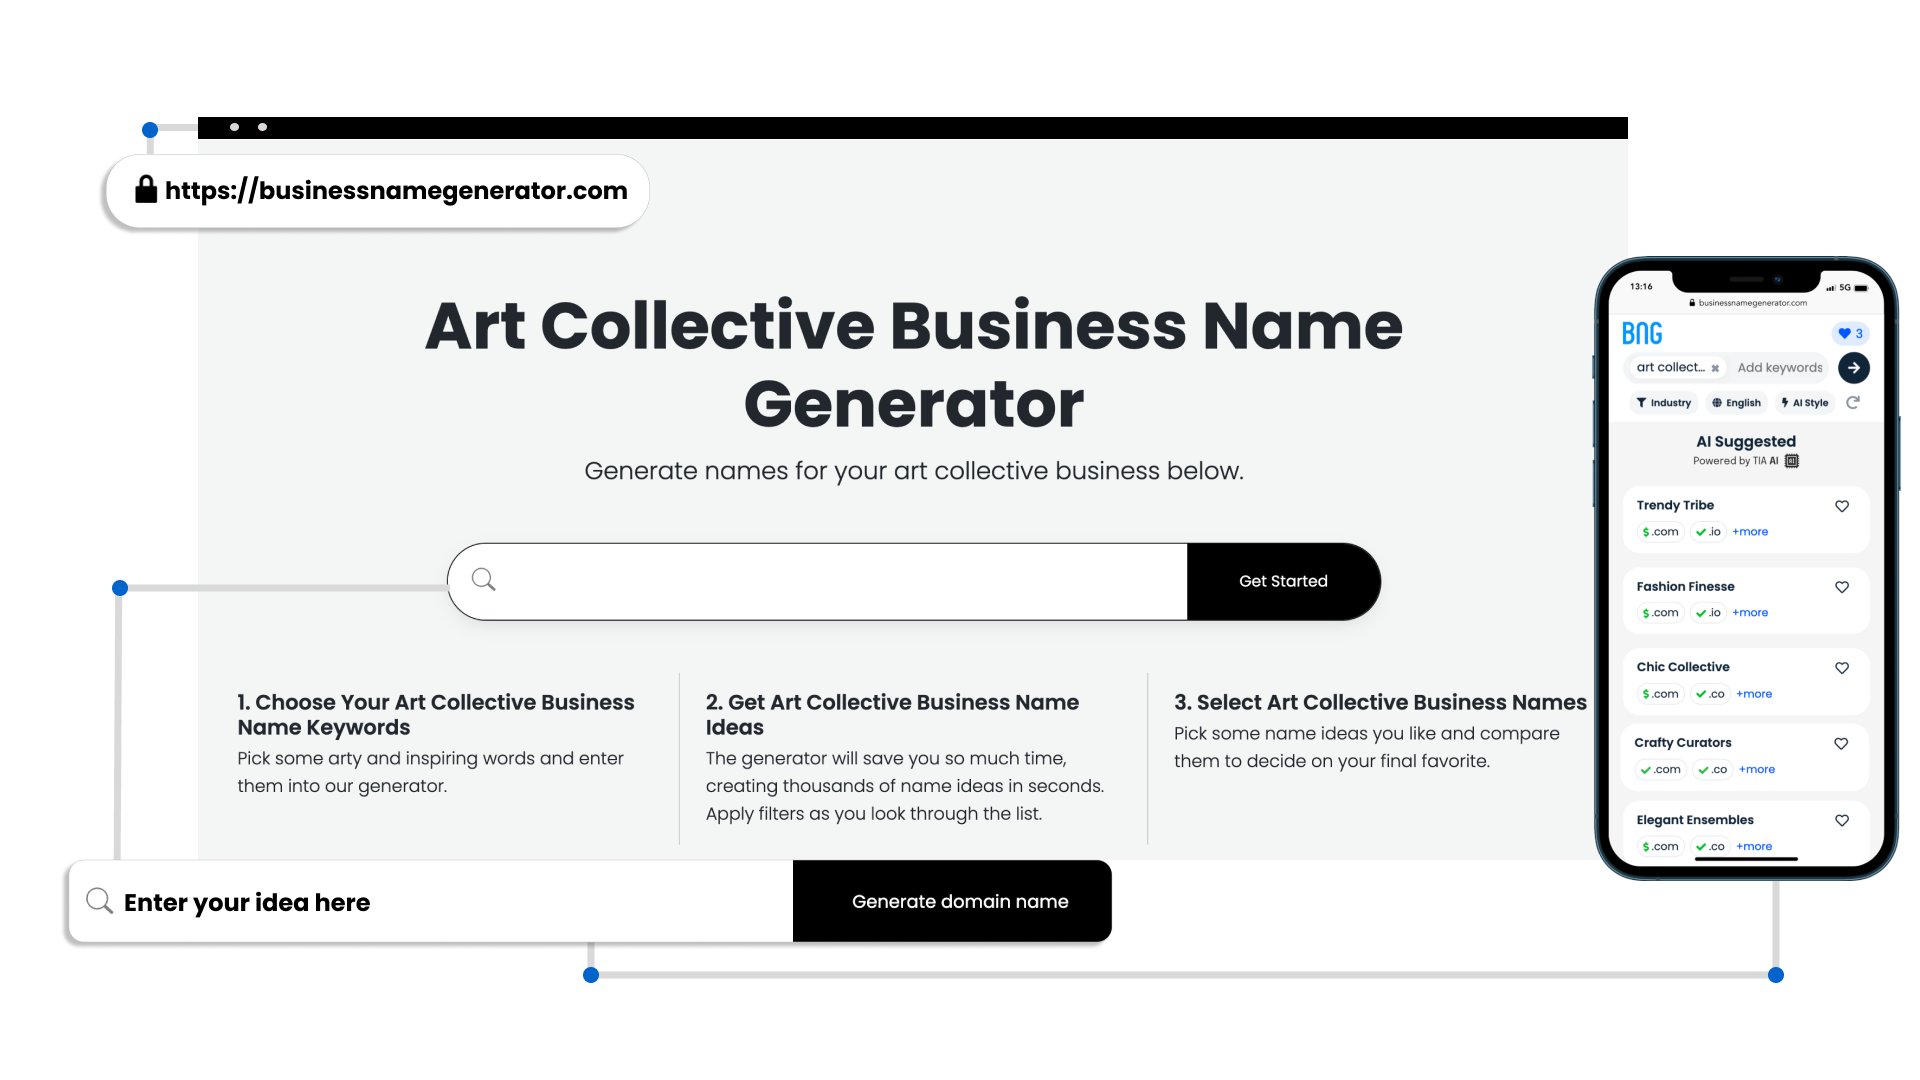 Screenshot - Art Collective Business Name Generator Functionality